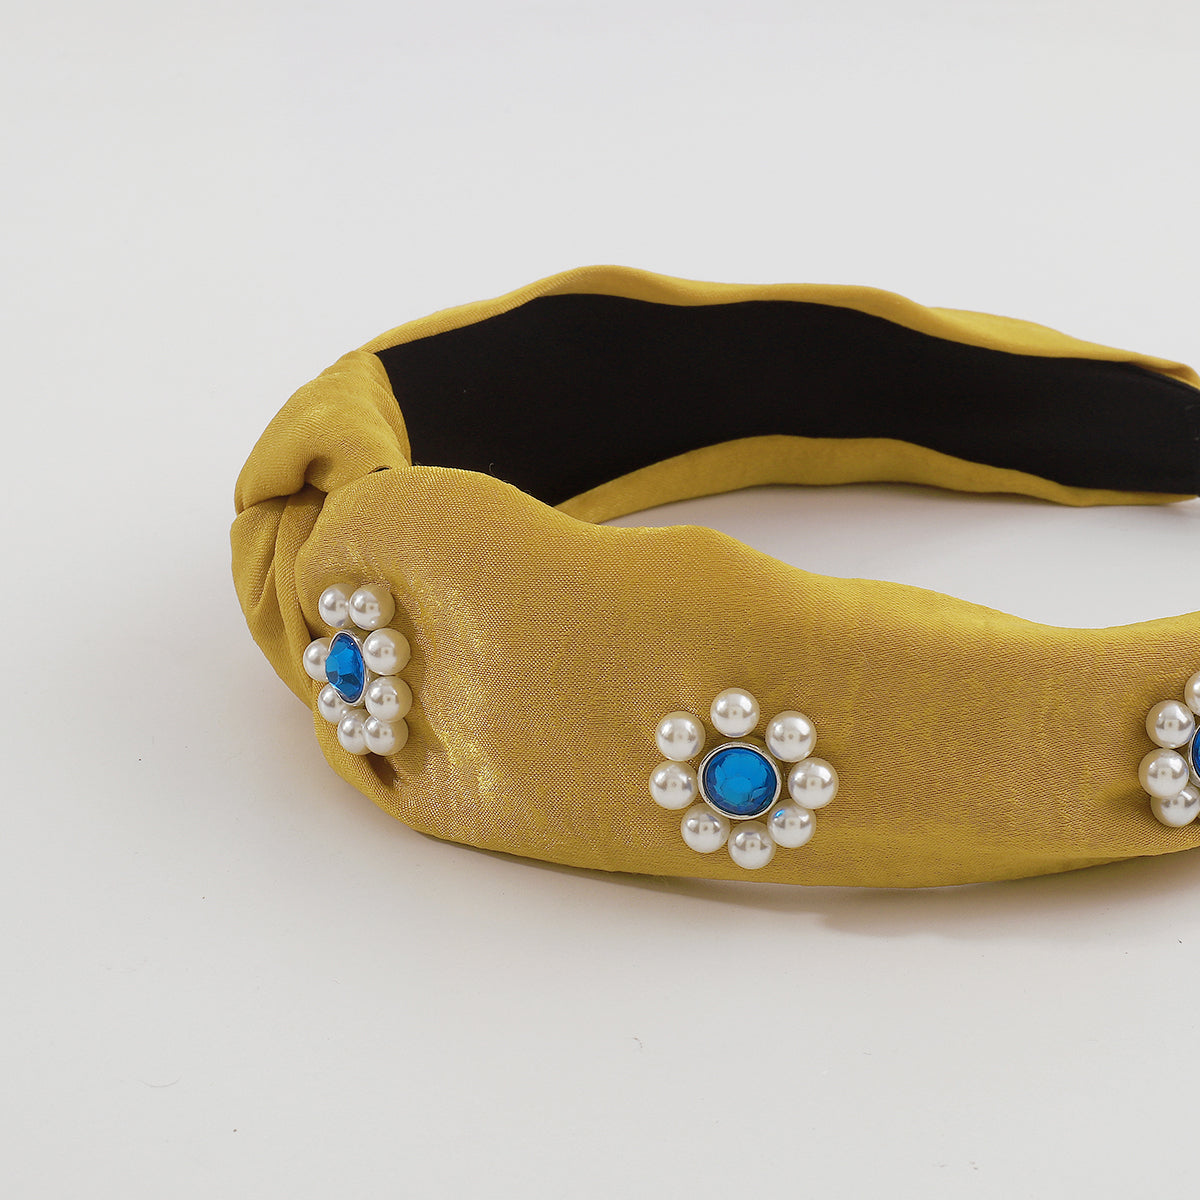 Handmade Flower Pearl Rhinestone Knot Headbands medyjewelry